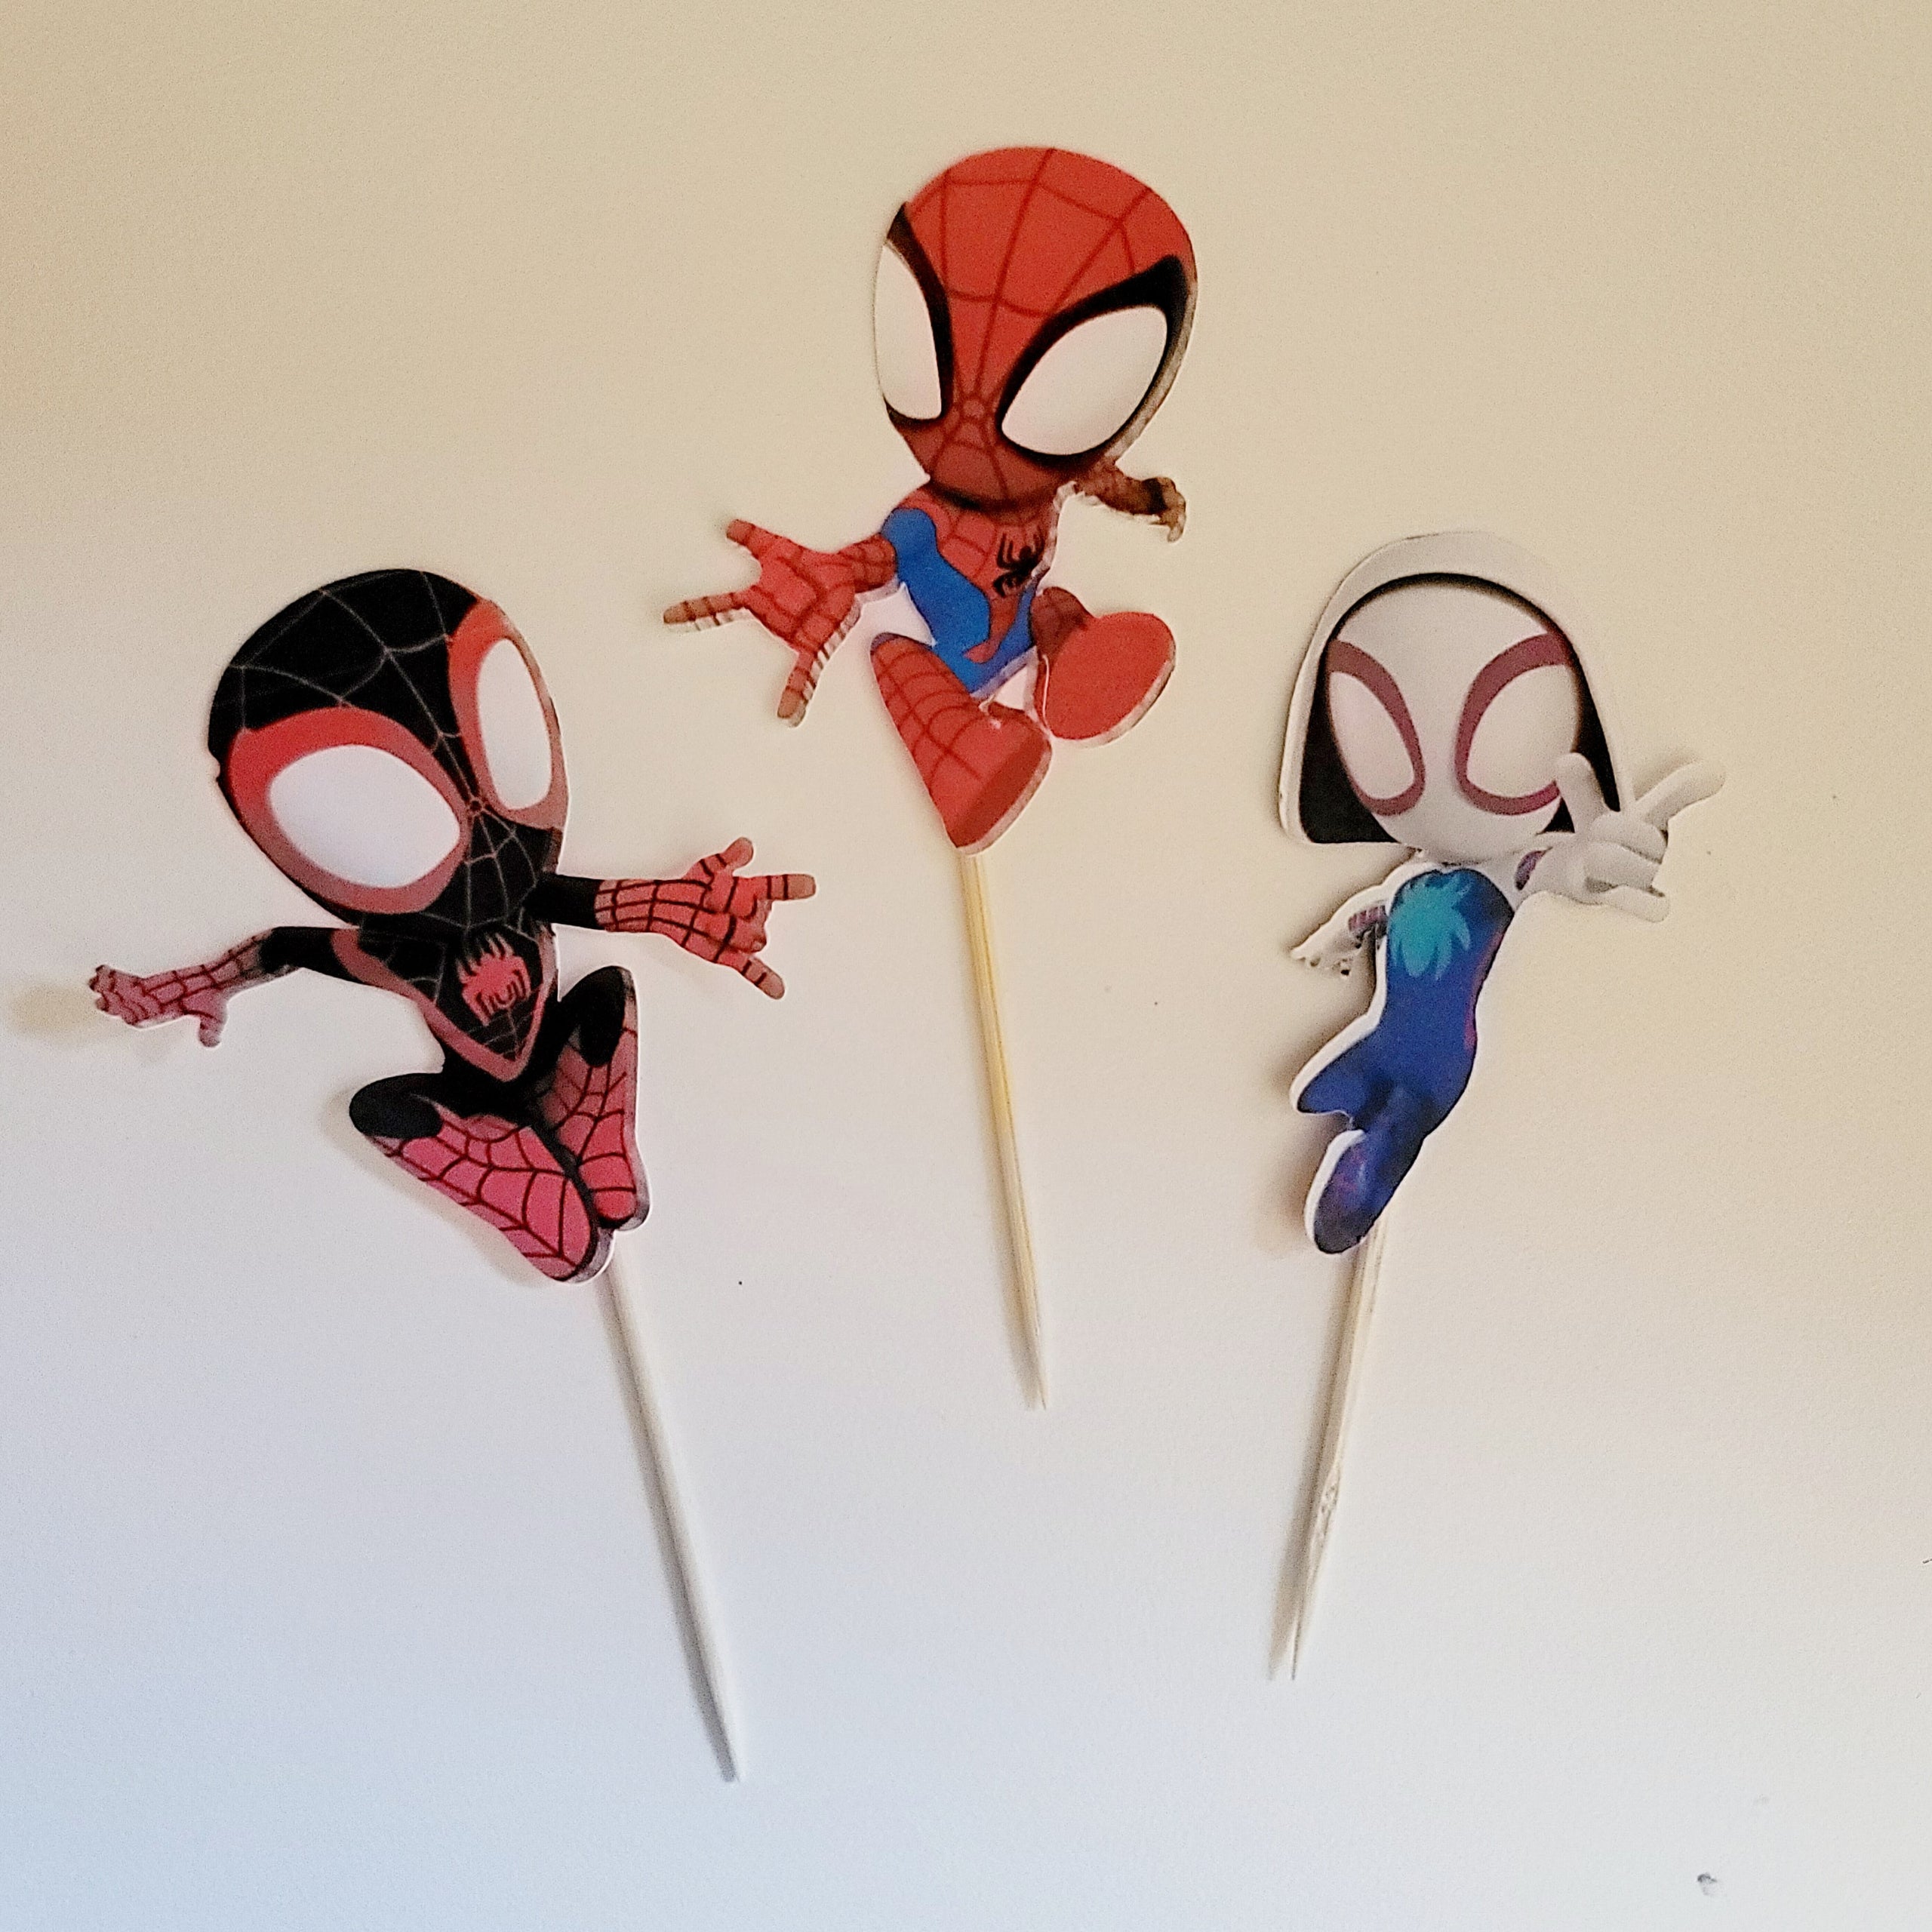 Craft: Spider-Man Cupcake Toppers - See Vanessa Craft